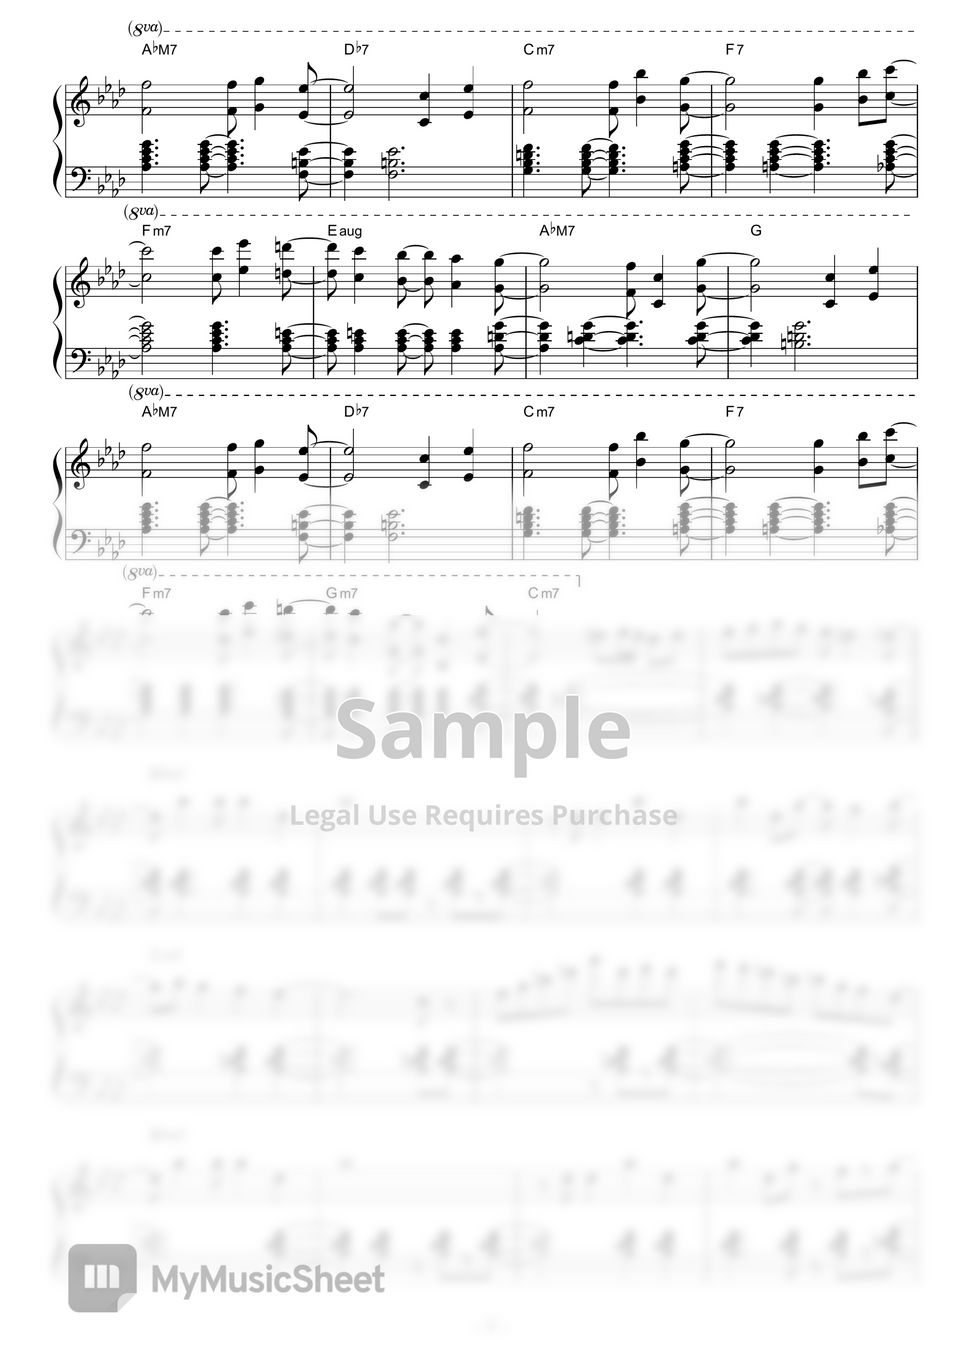 Joe Hisaishi - The Path of Wind (My Neighbor Totoro(Jazz ver.)) by piano*score